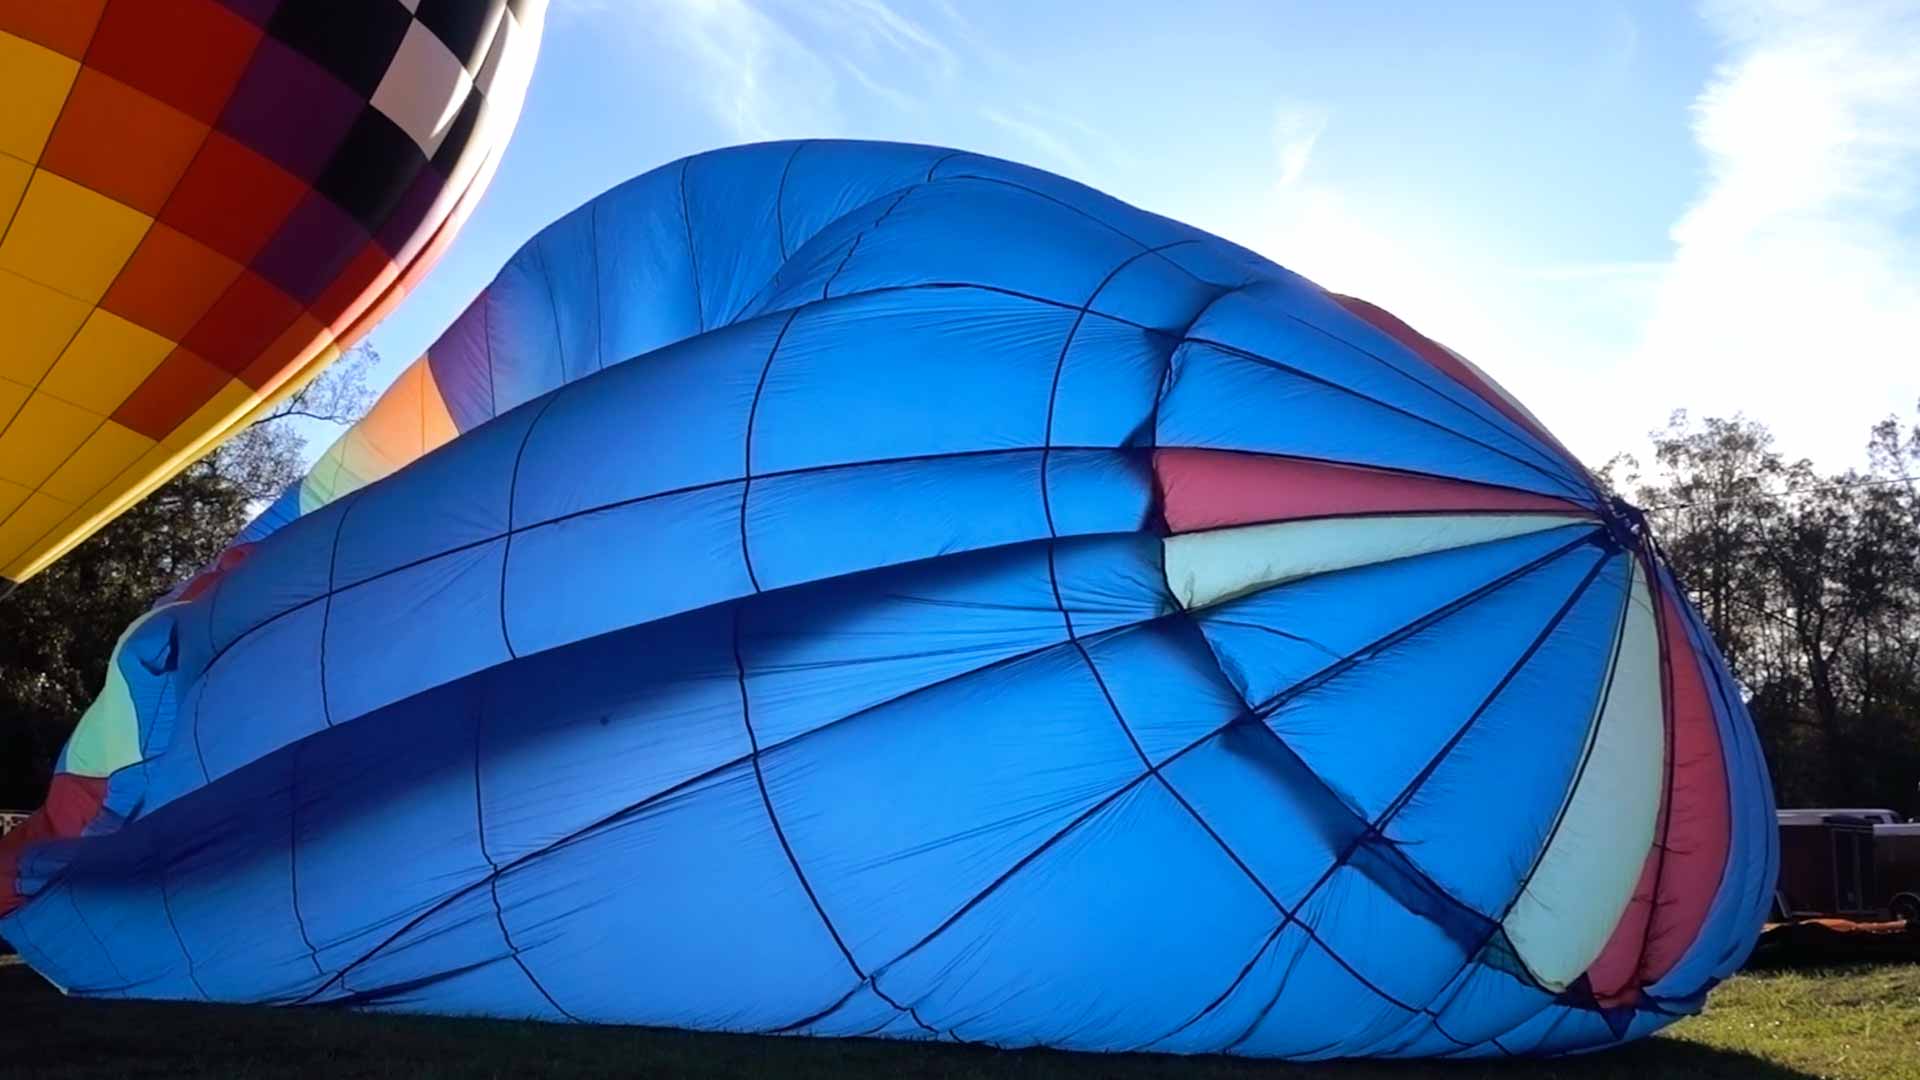 carolina balloon festival balloonfest video The Nomad Experiment